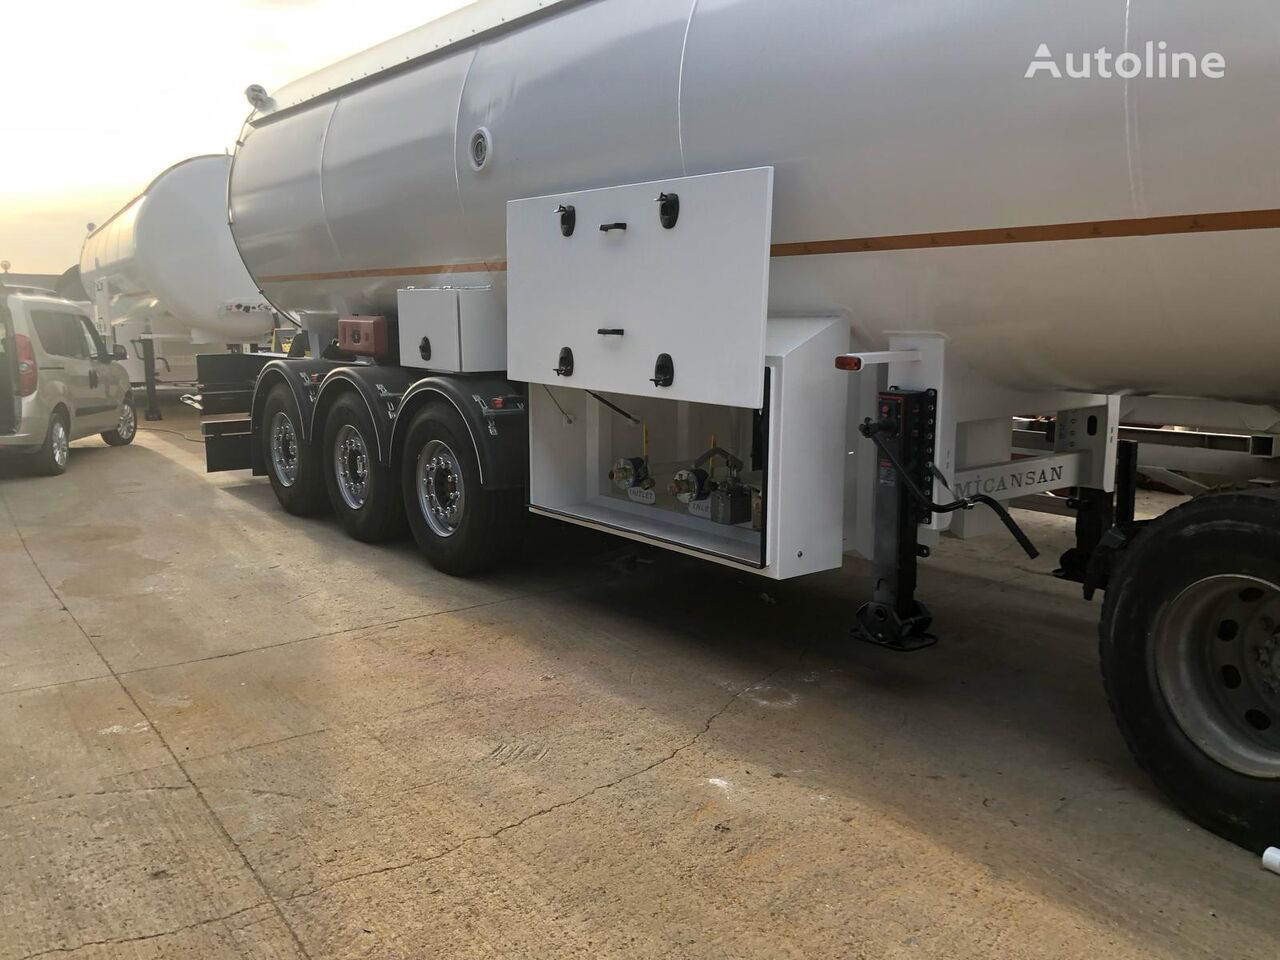 nová cisterna LPG Micansan READY FOR SHIPMENT 45 M3 LPG GAS TANKER SEMITRAIL